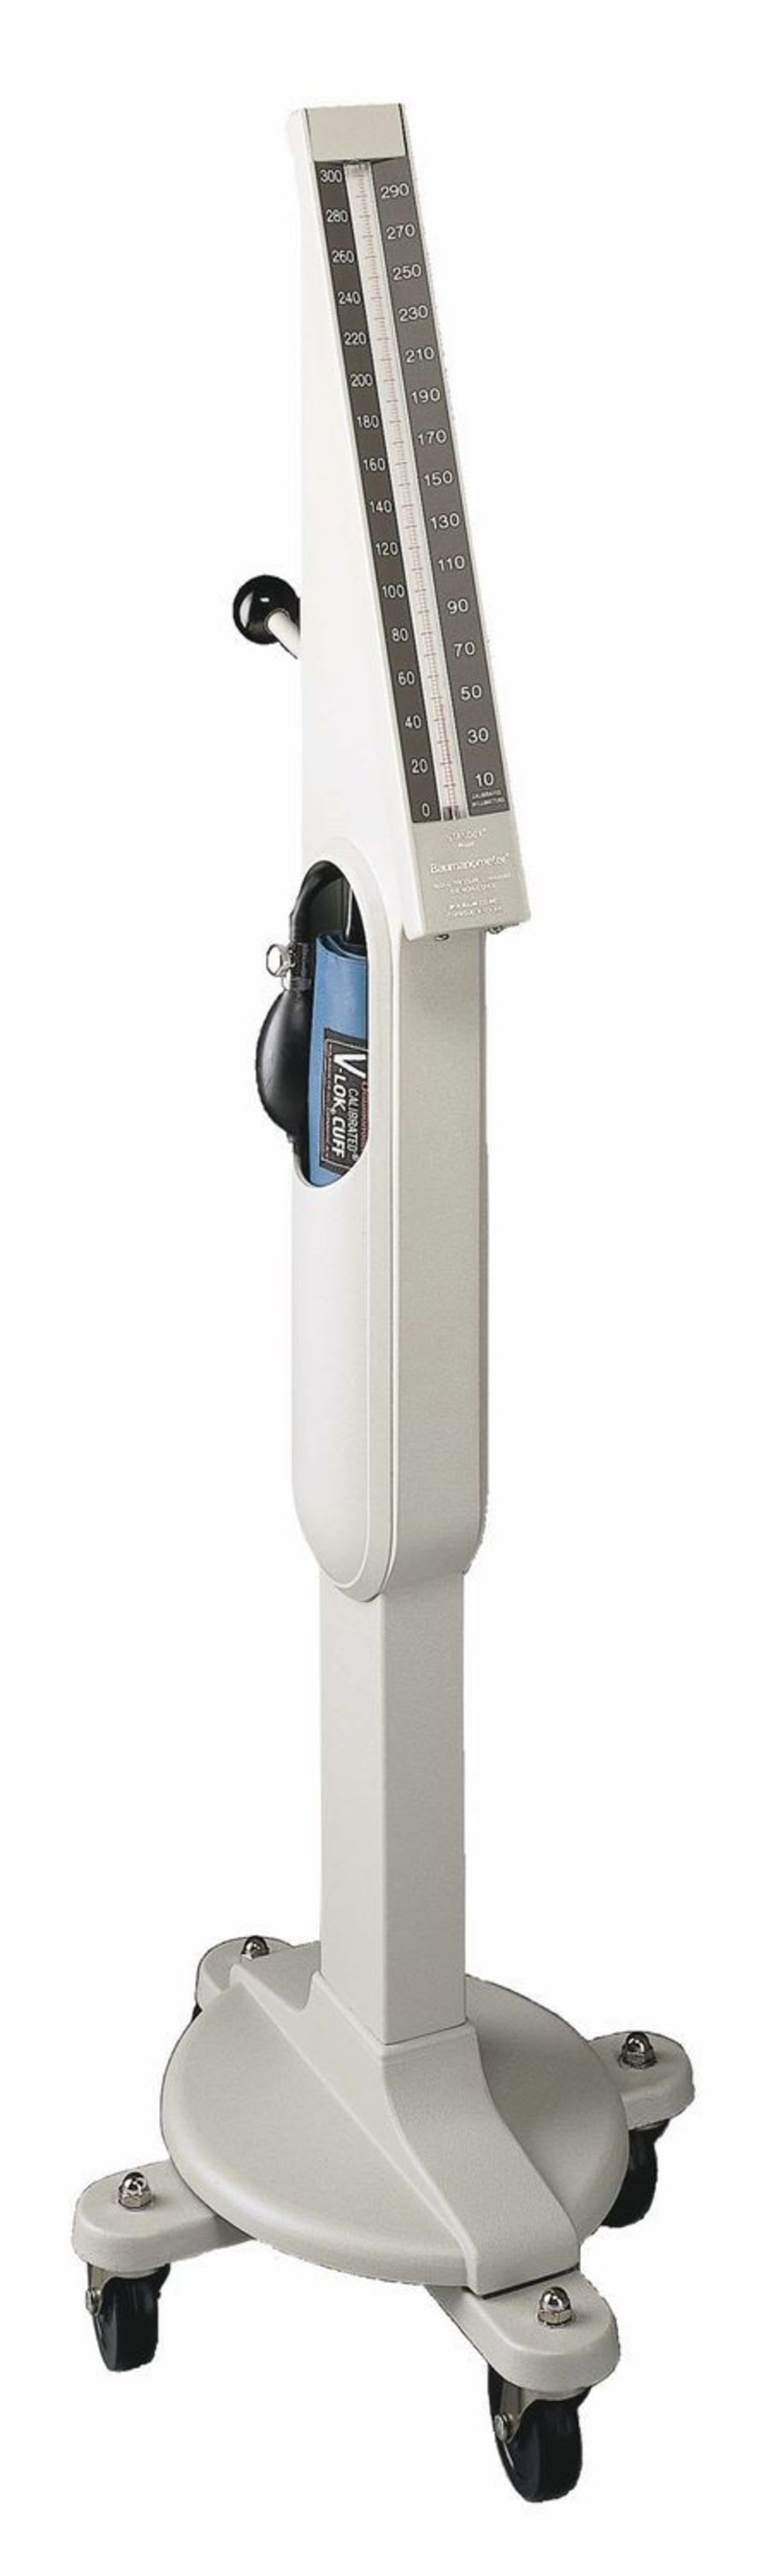 Mercury sphygmomanometer / floor standing Baumanometer® Standby® series W.A. Baum